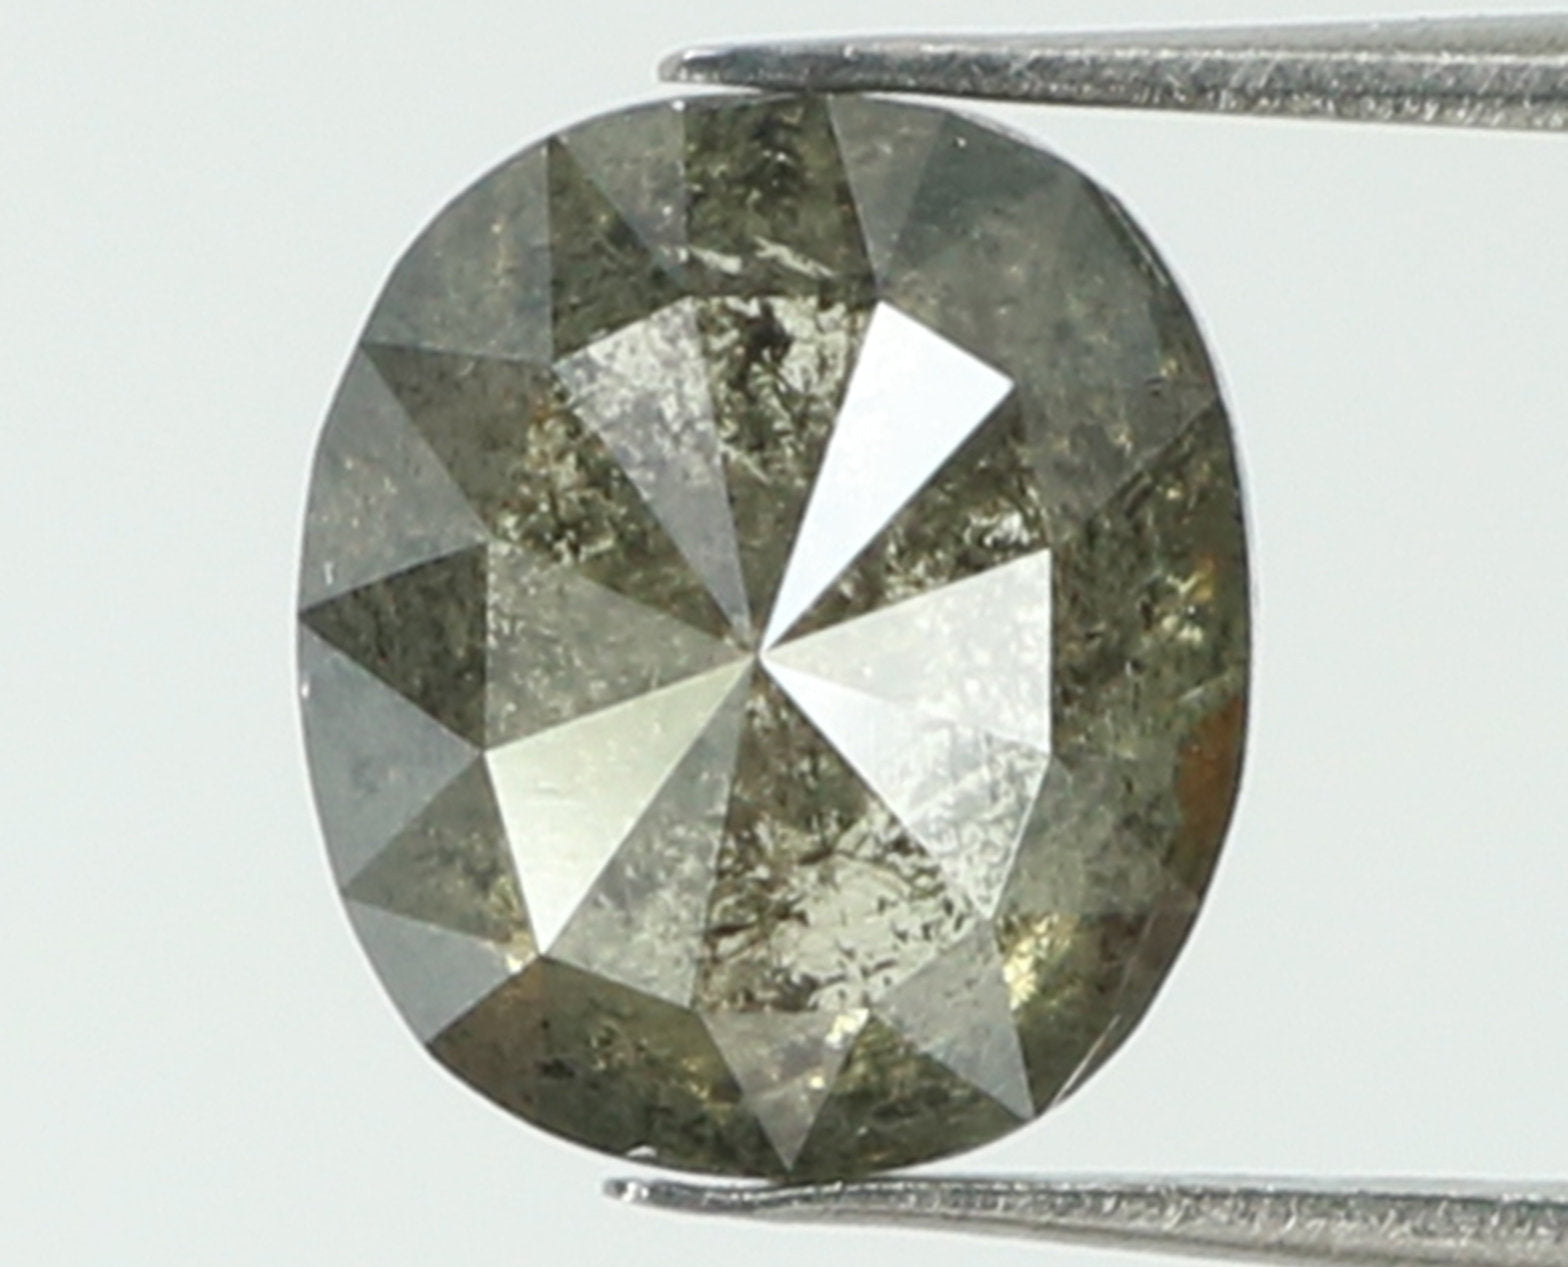 0.99 CT Natural Loose Oval Shape Diamond Salt And Pepper Oval Rose Cut Diamond 6.20 MM Black Grey Color Oval Shape Rose Cut Diamond QL7397